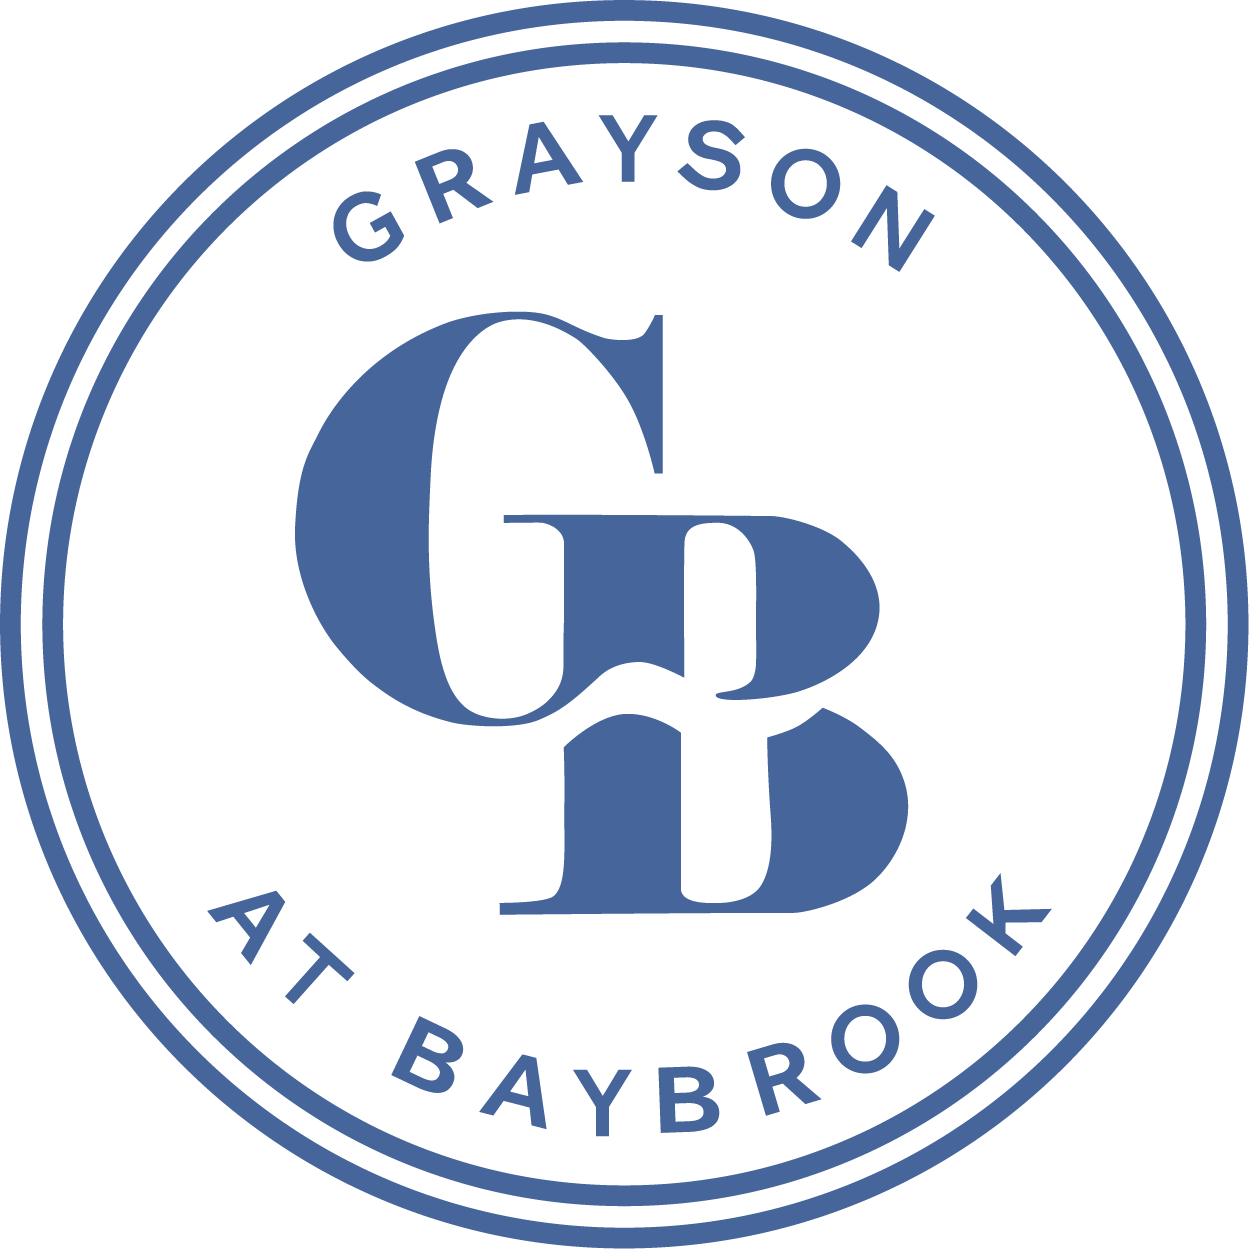 The Grayson At Baybrook logo